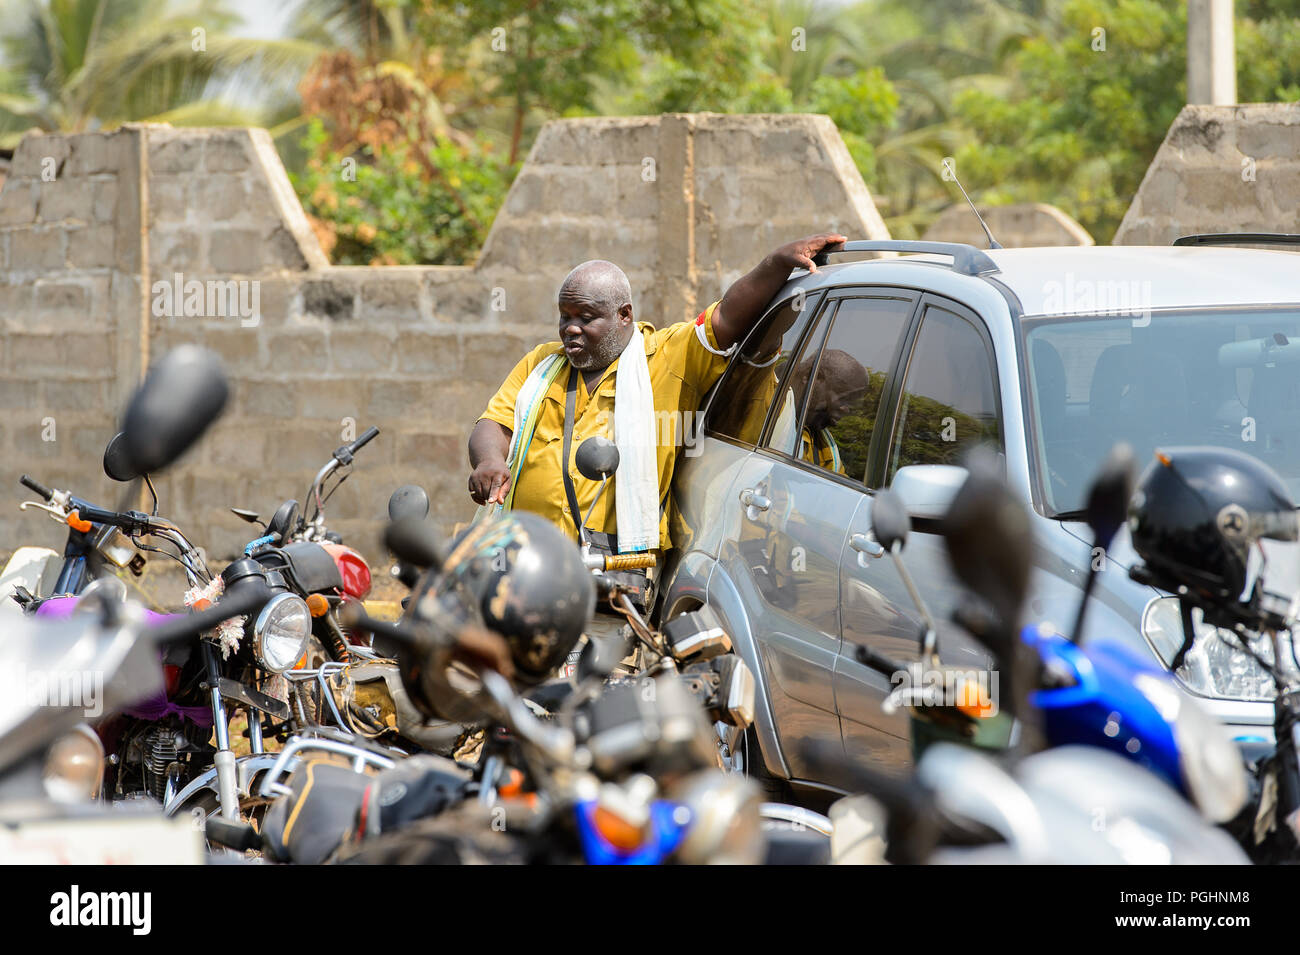 OUIDAH, BENIN - Jan 10, 2017: Unbekannter beninischen Mann lehnt sich an den geparkten Auto. Benin Menschen leiden unter der Armut wegen der schlechten Konjunktur Stockfoto